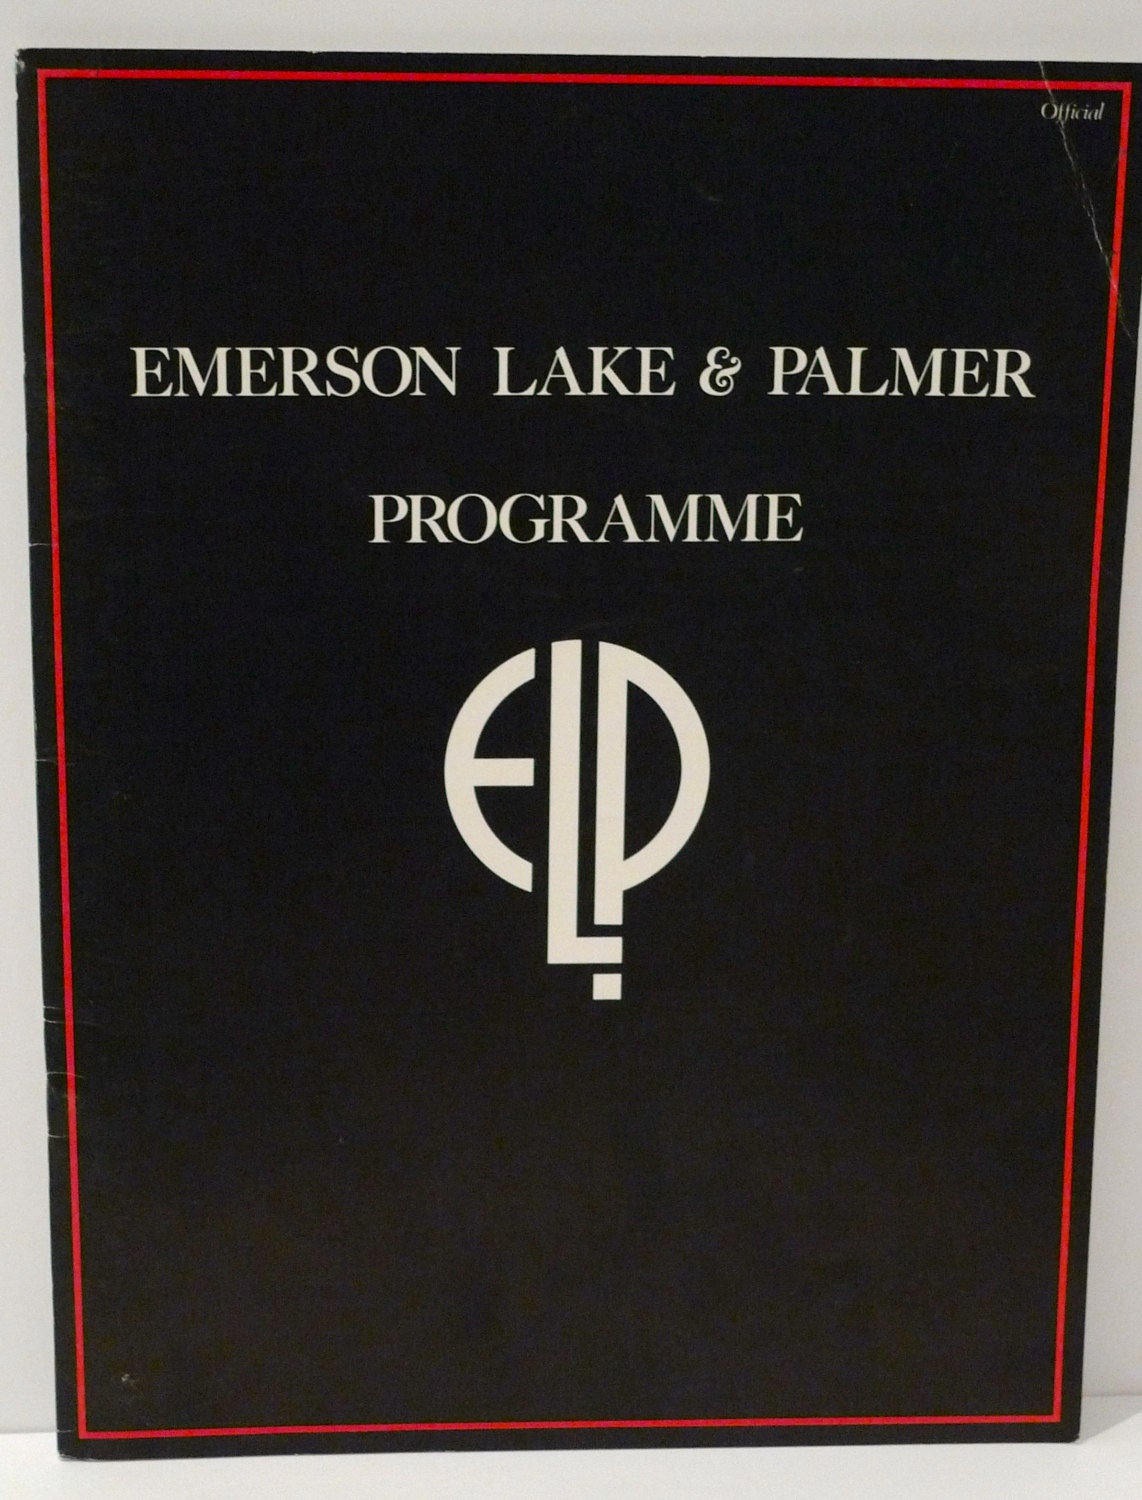 Emerson Lake and Palmer Concert Tour Program by MohawkMusic